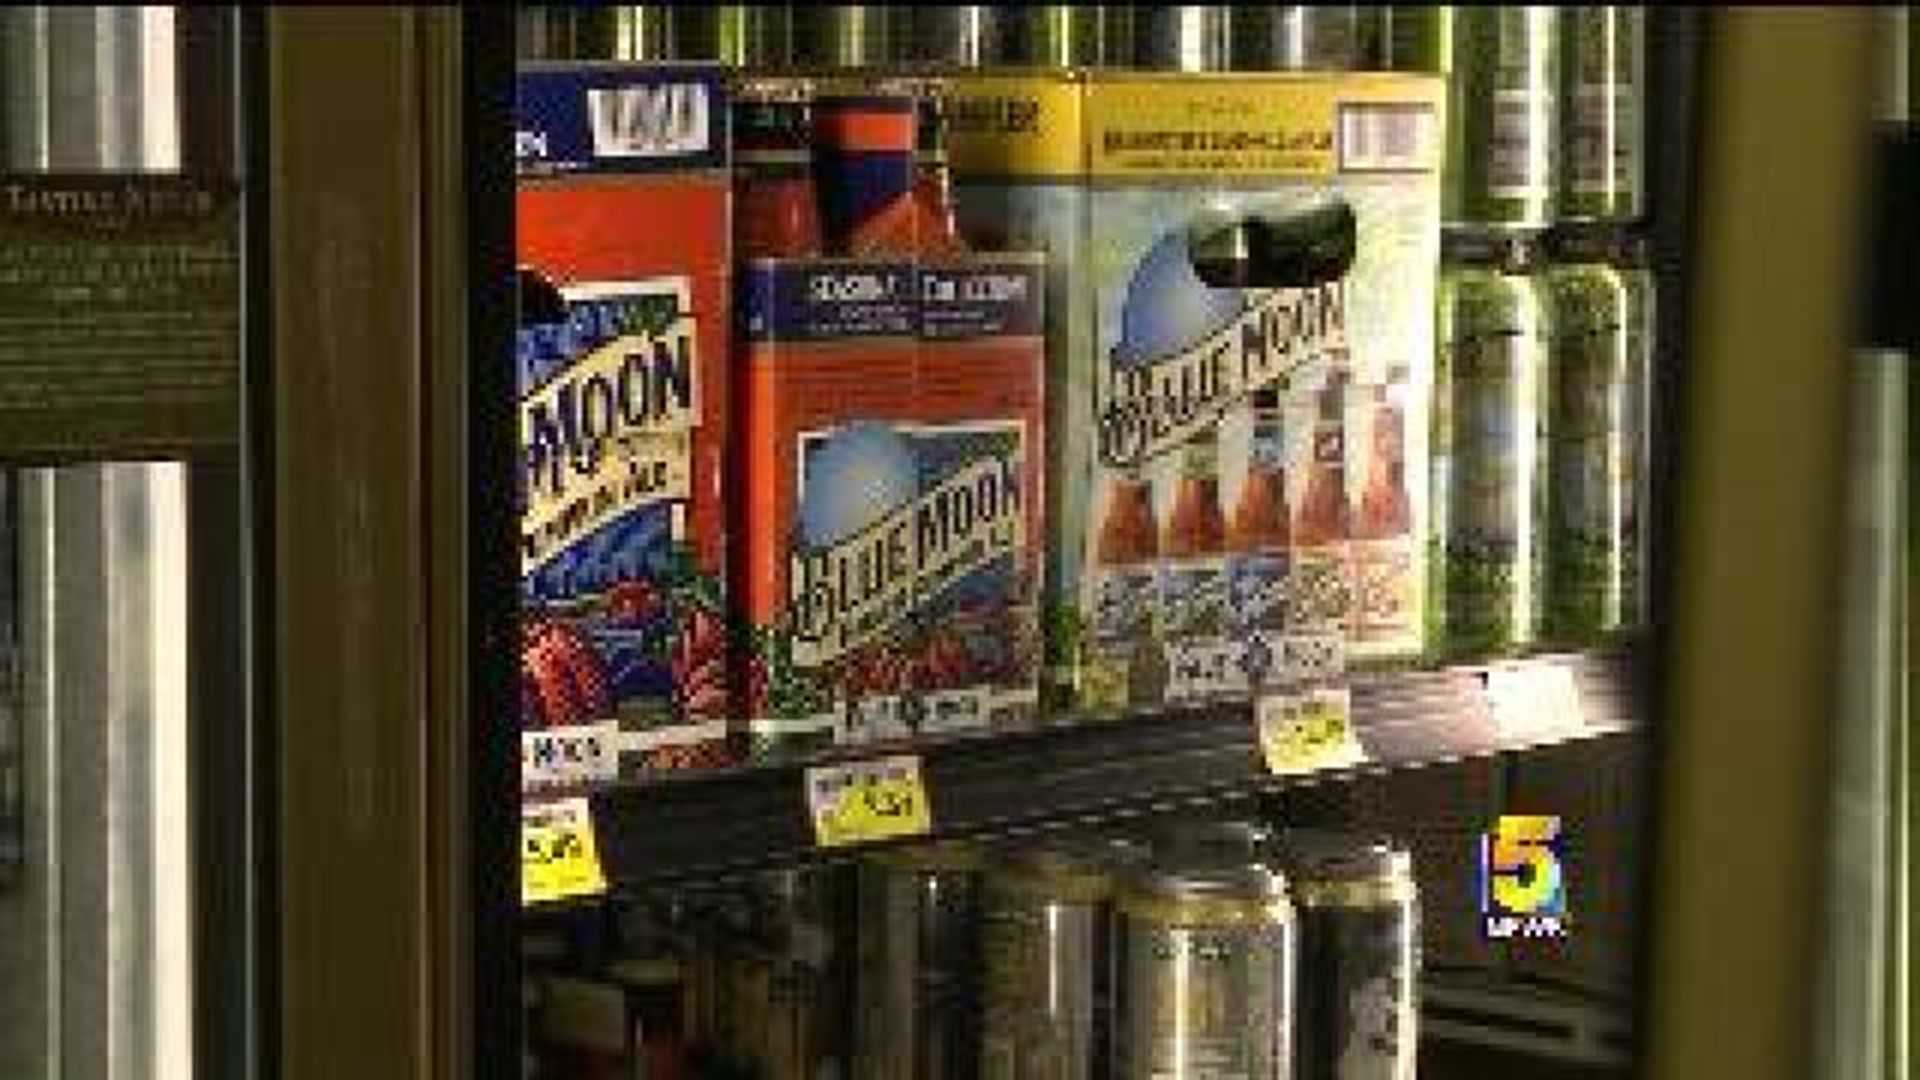 Poll For Arkansas Liquor Sales